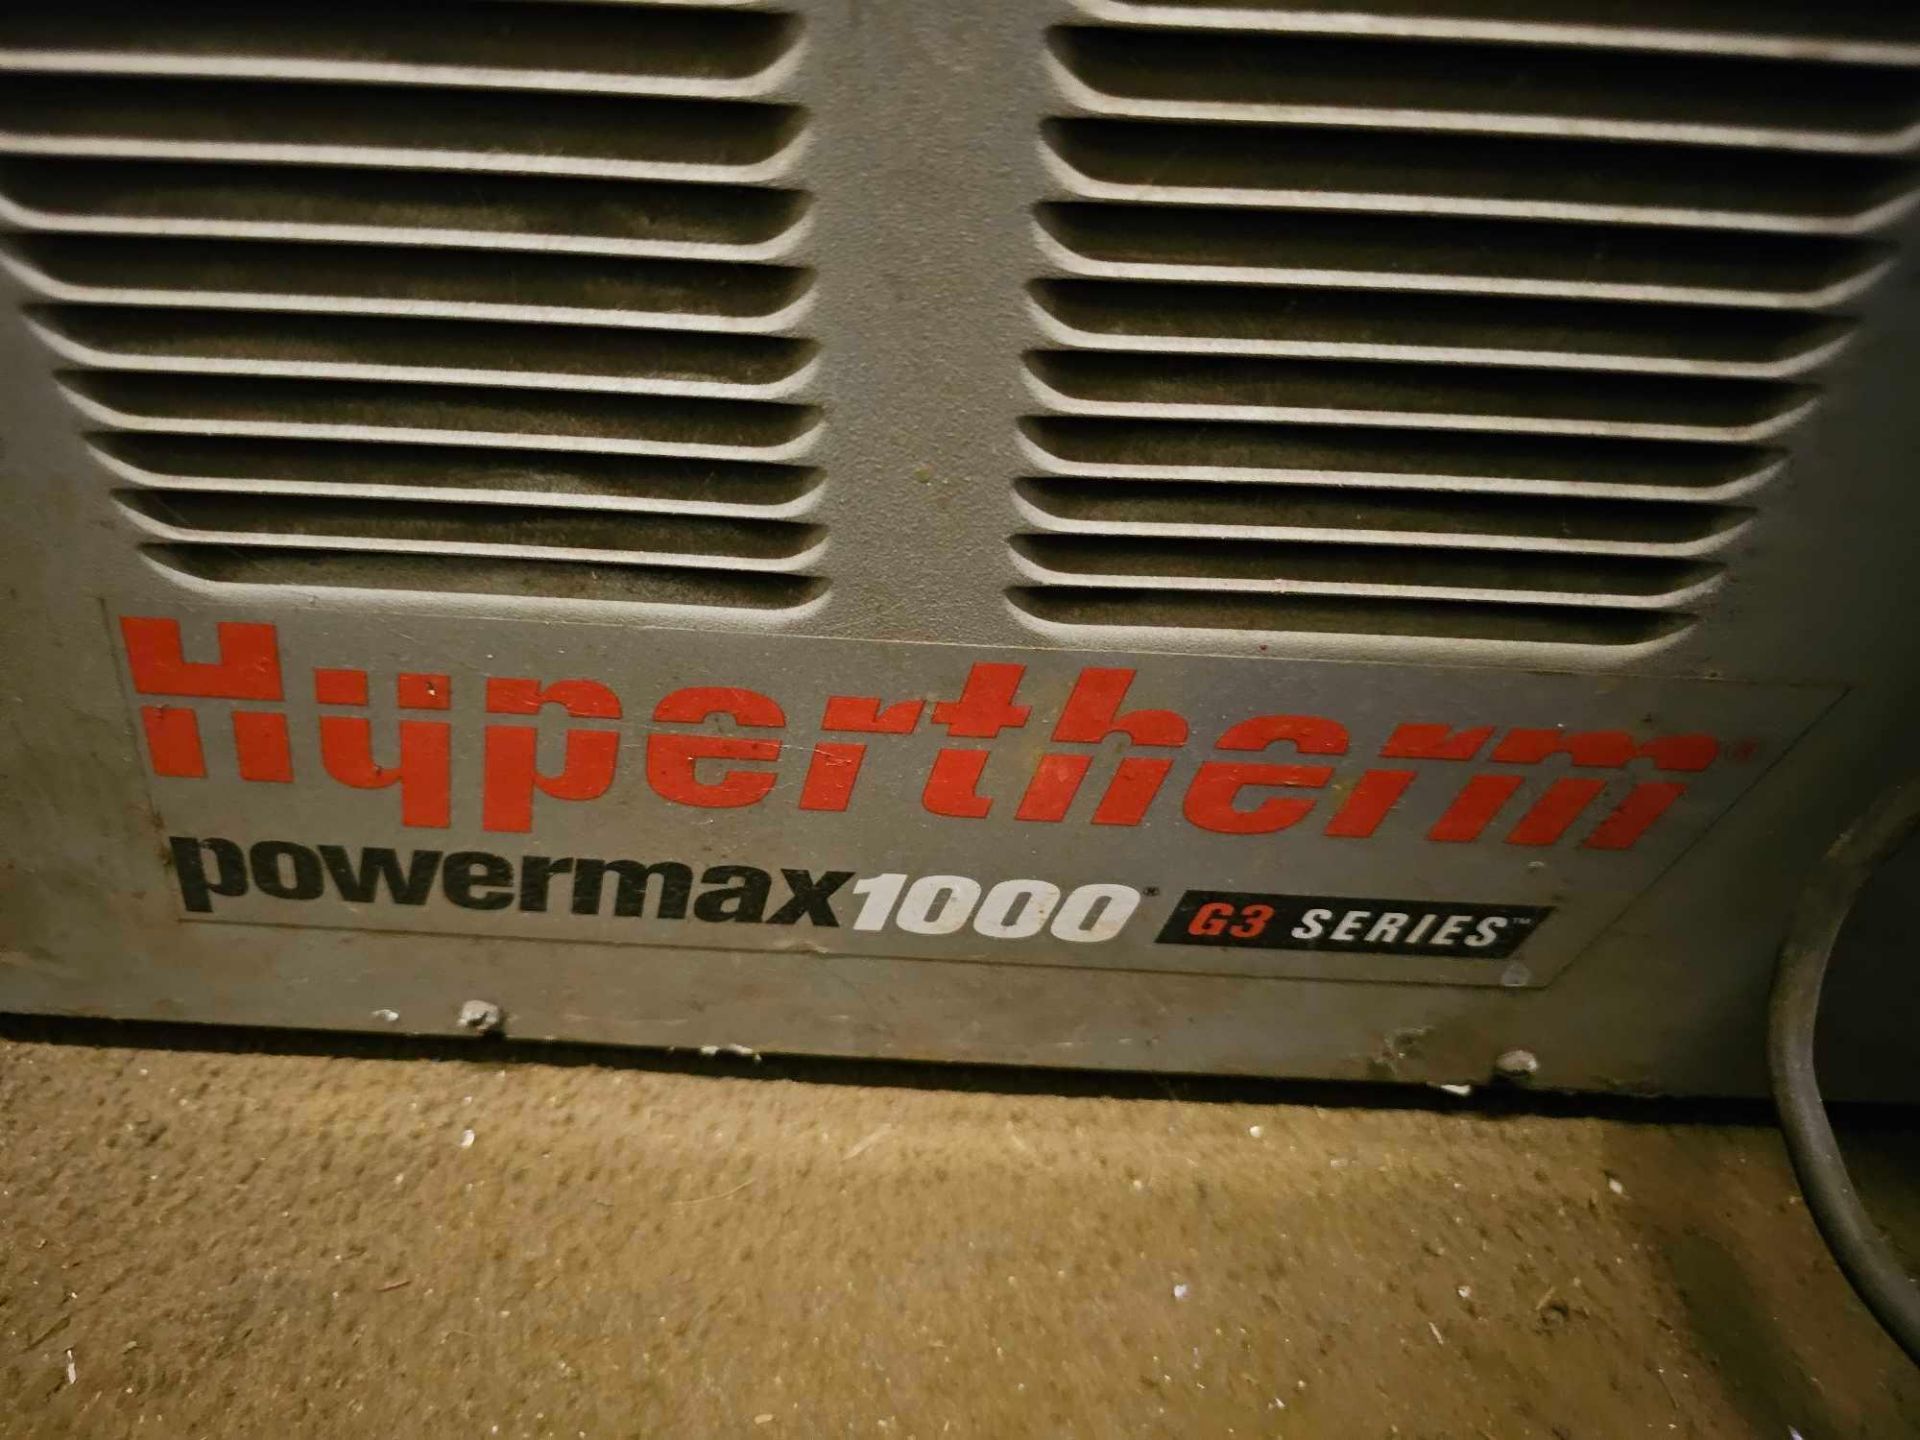 Hypertherm Powermax 1000 G3 Plasma Cutter - Image 3 of 4